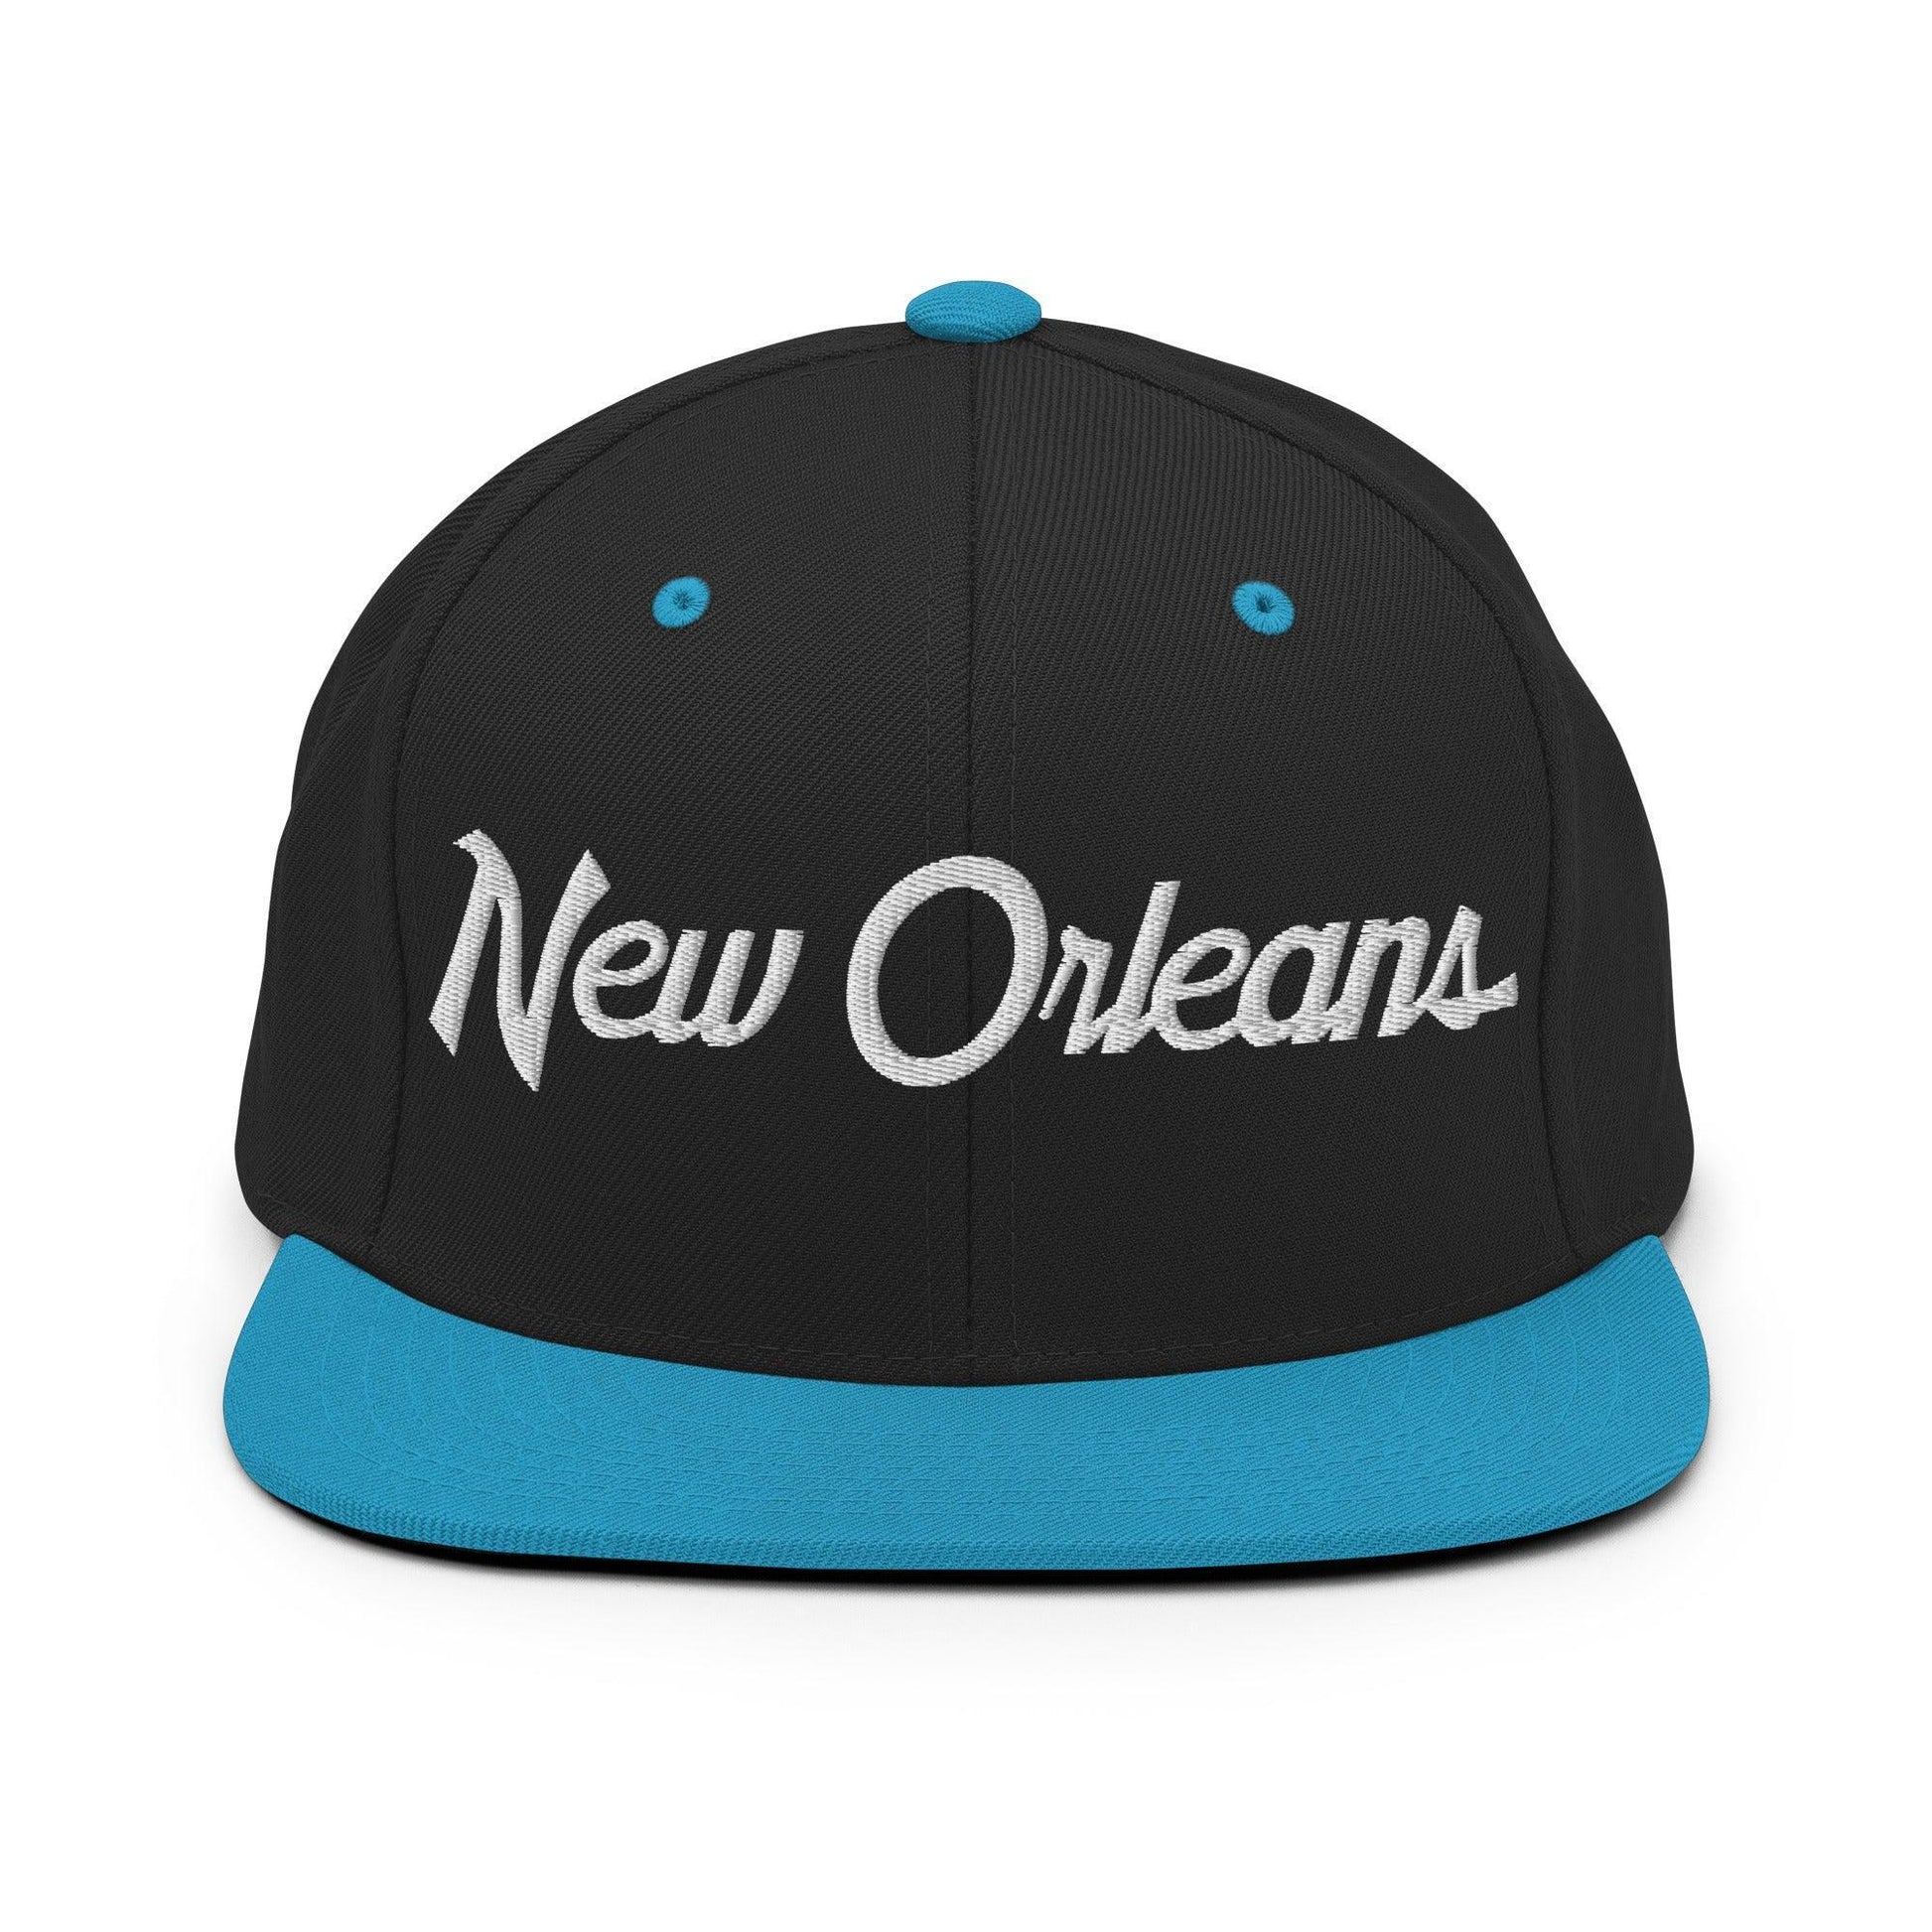 New Orleans Script Snapback Hat Black/ Teal